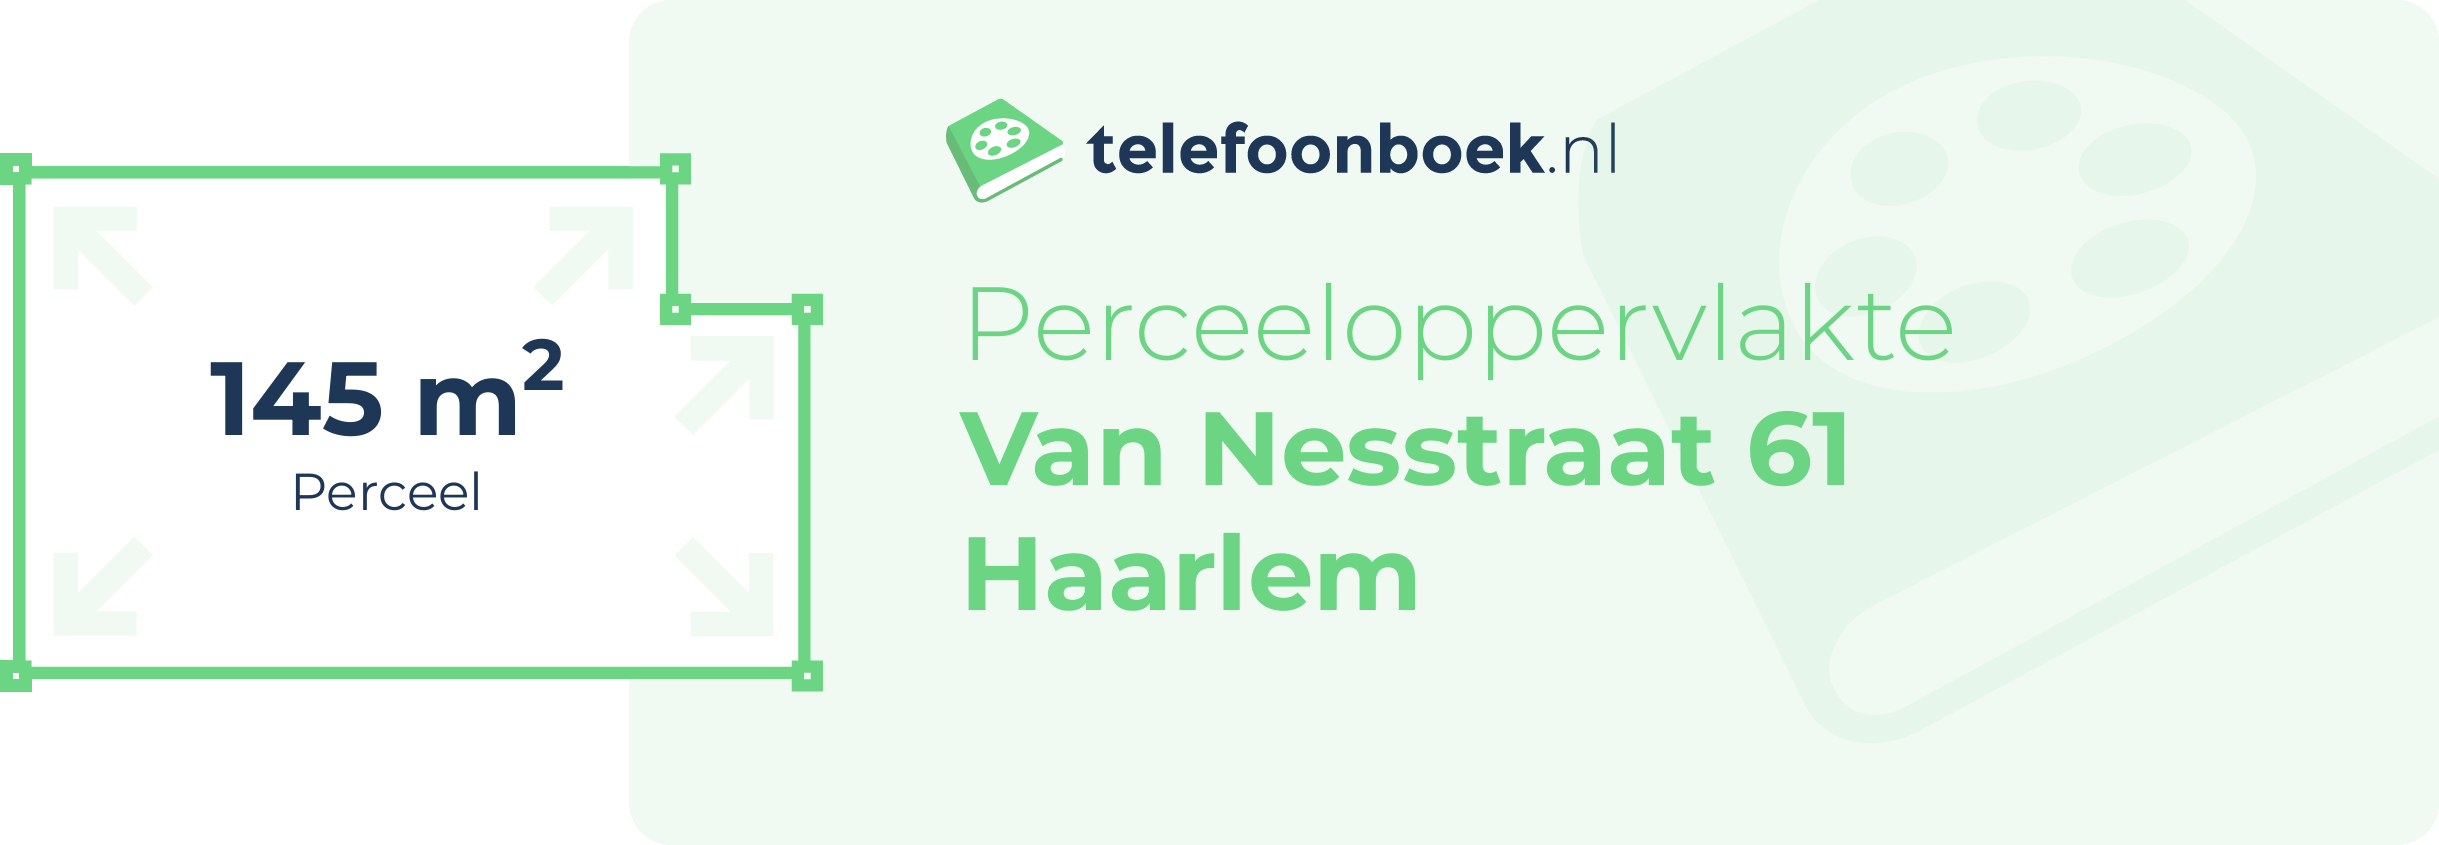 Perceeloppervlakte Van Nesstraat 61 Haarlem